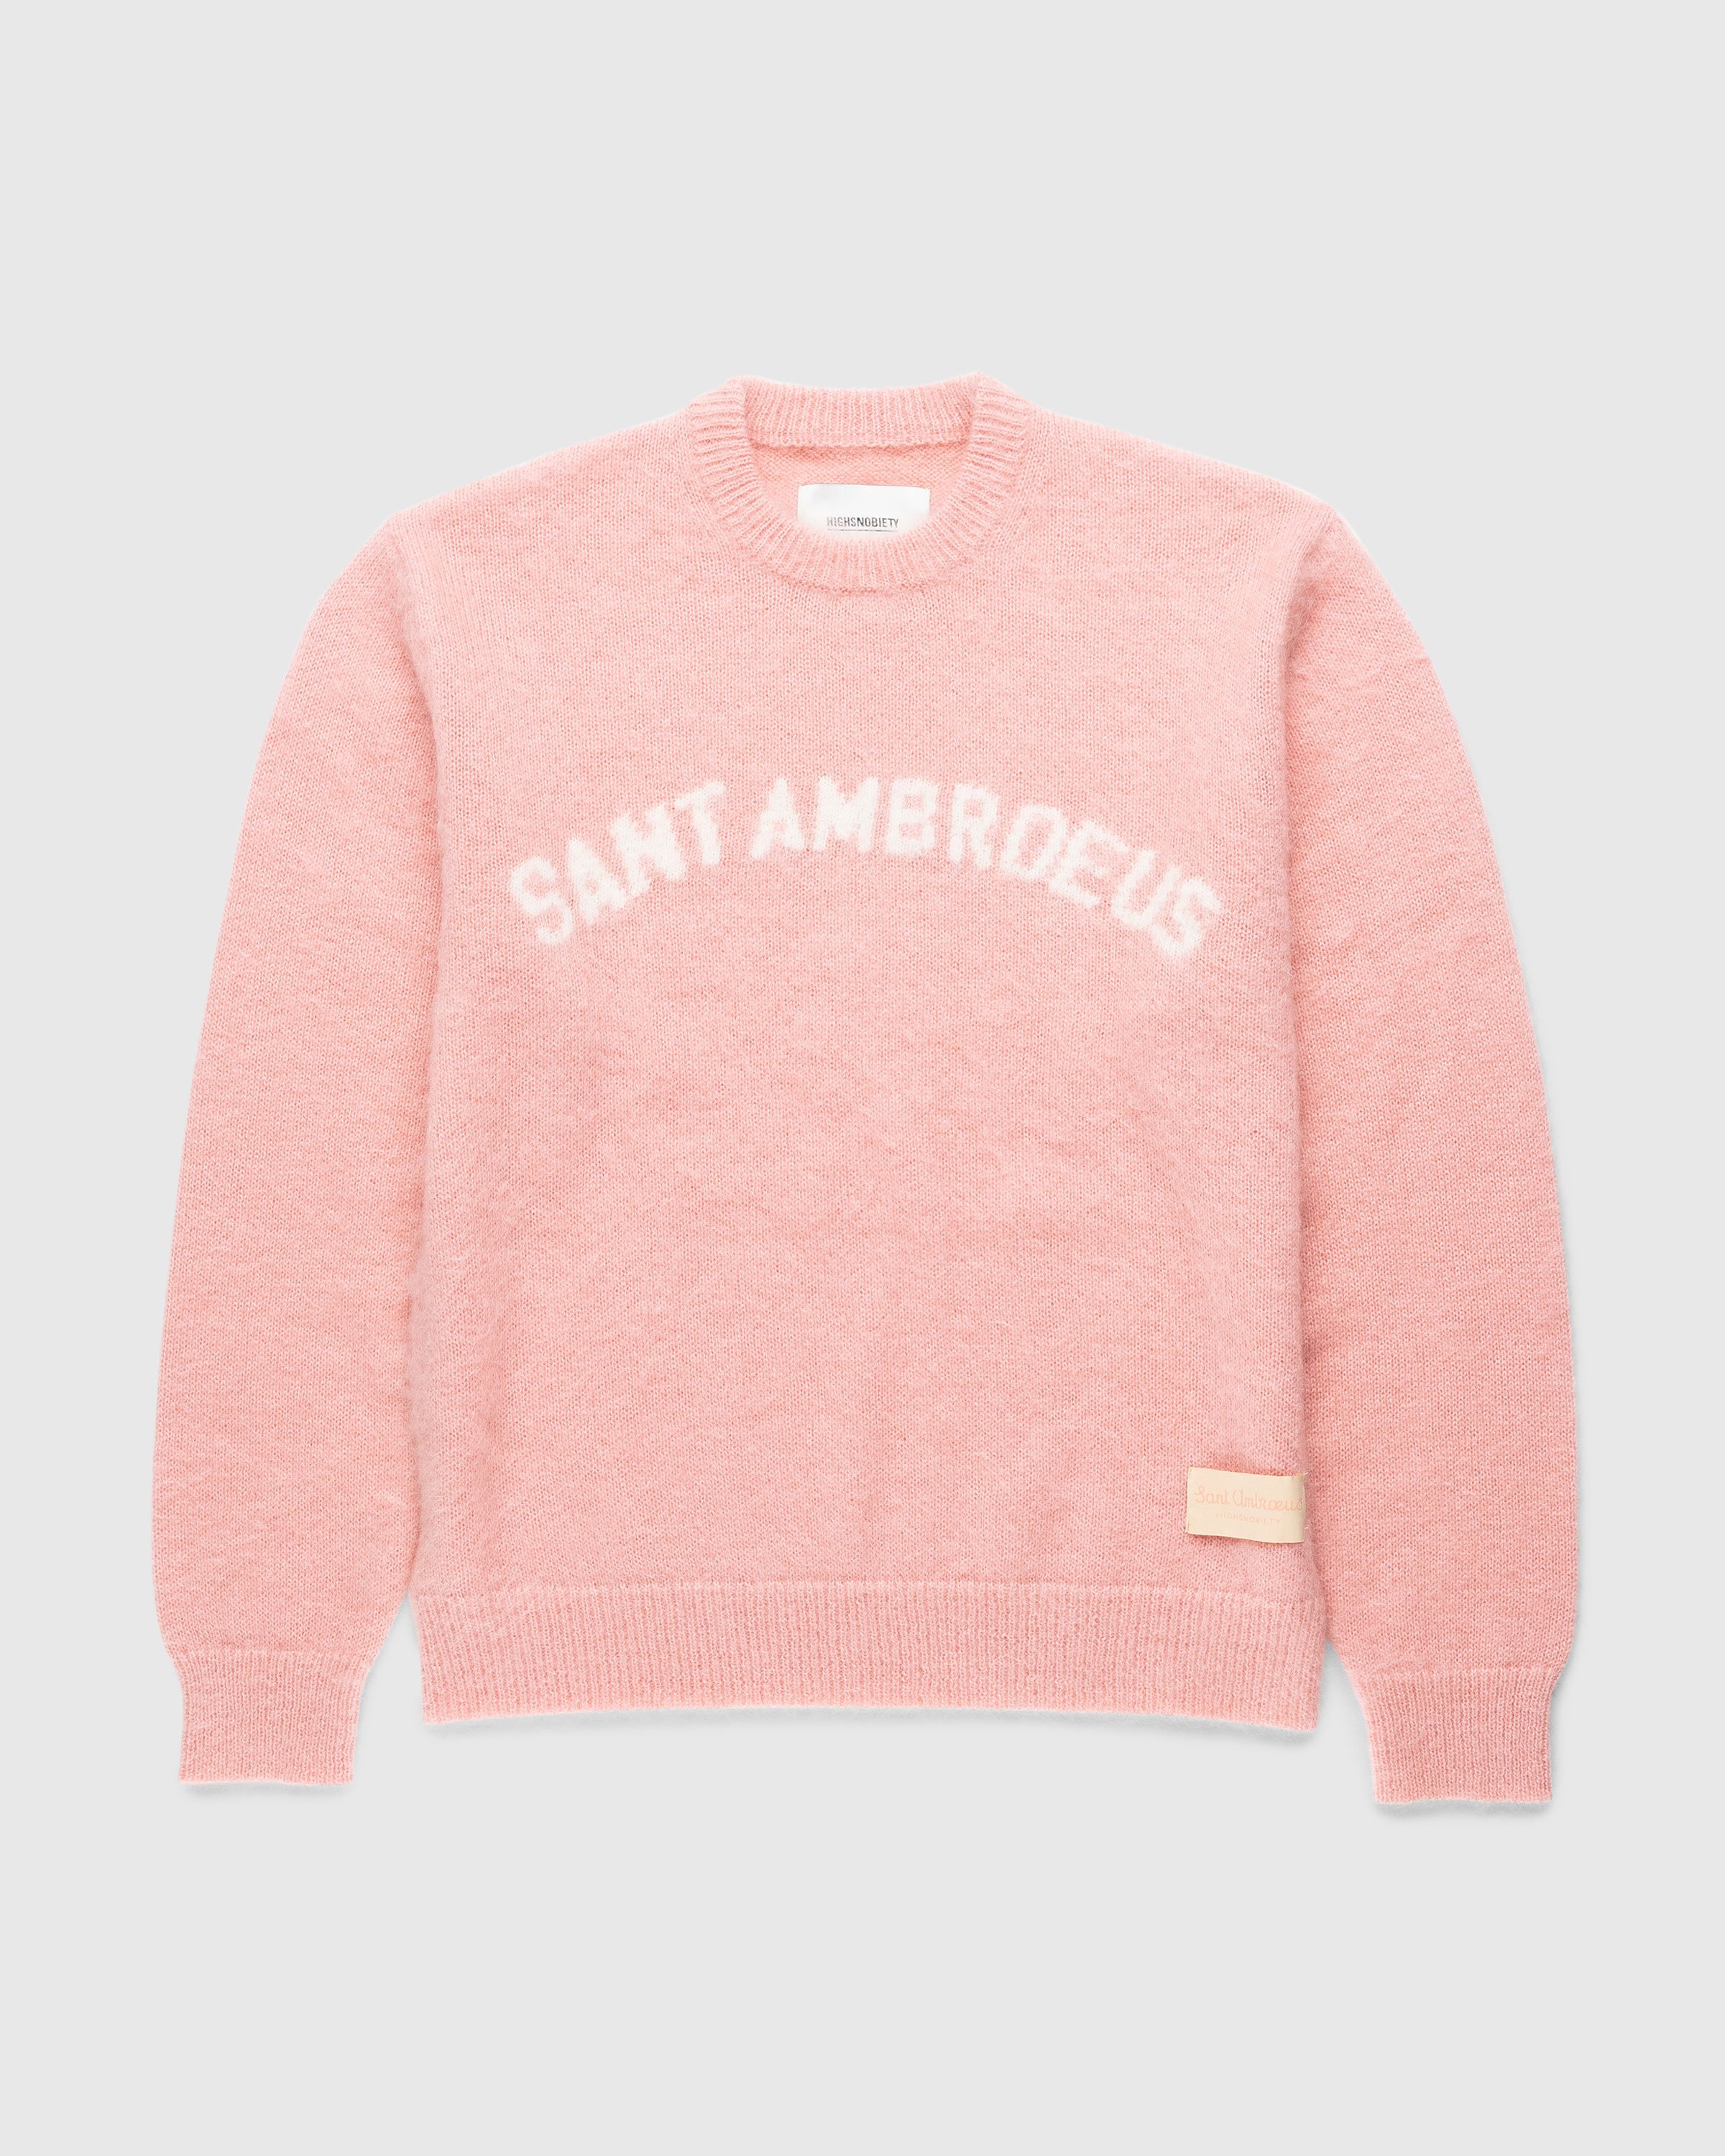 Highsnobiety x Sant Ambroeus - Pink Knit Crewneck - Clothing - Pink - Image 1